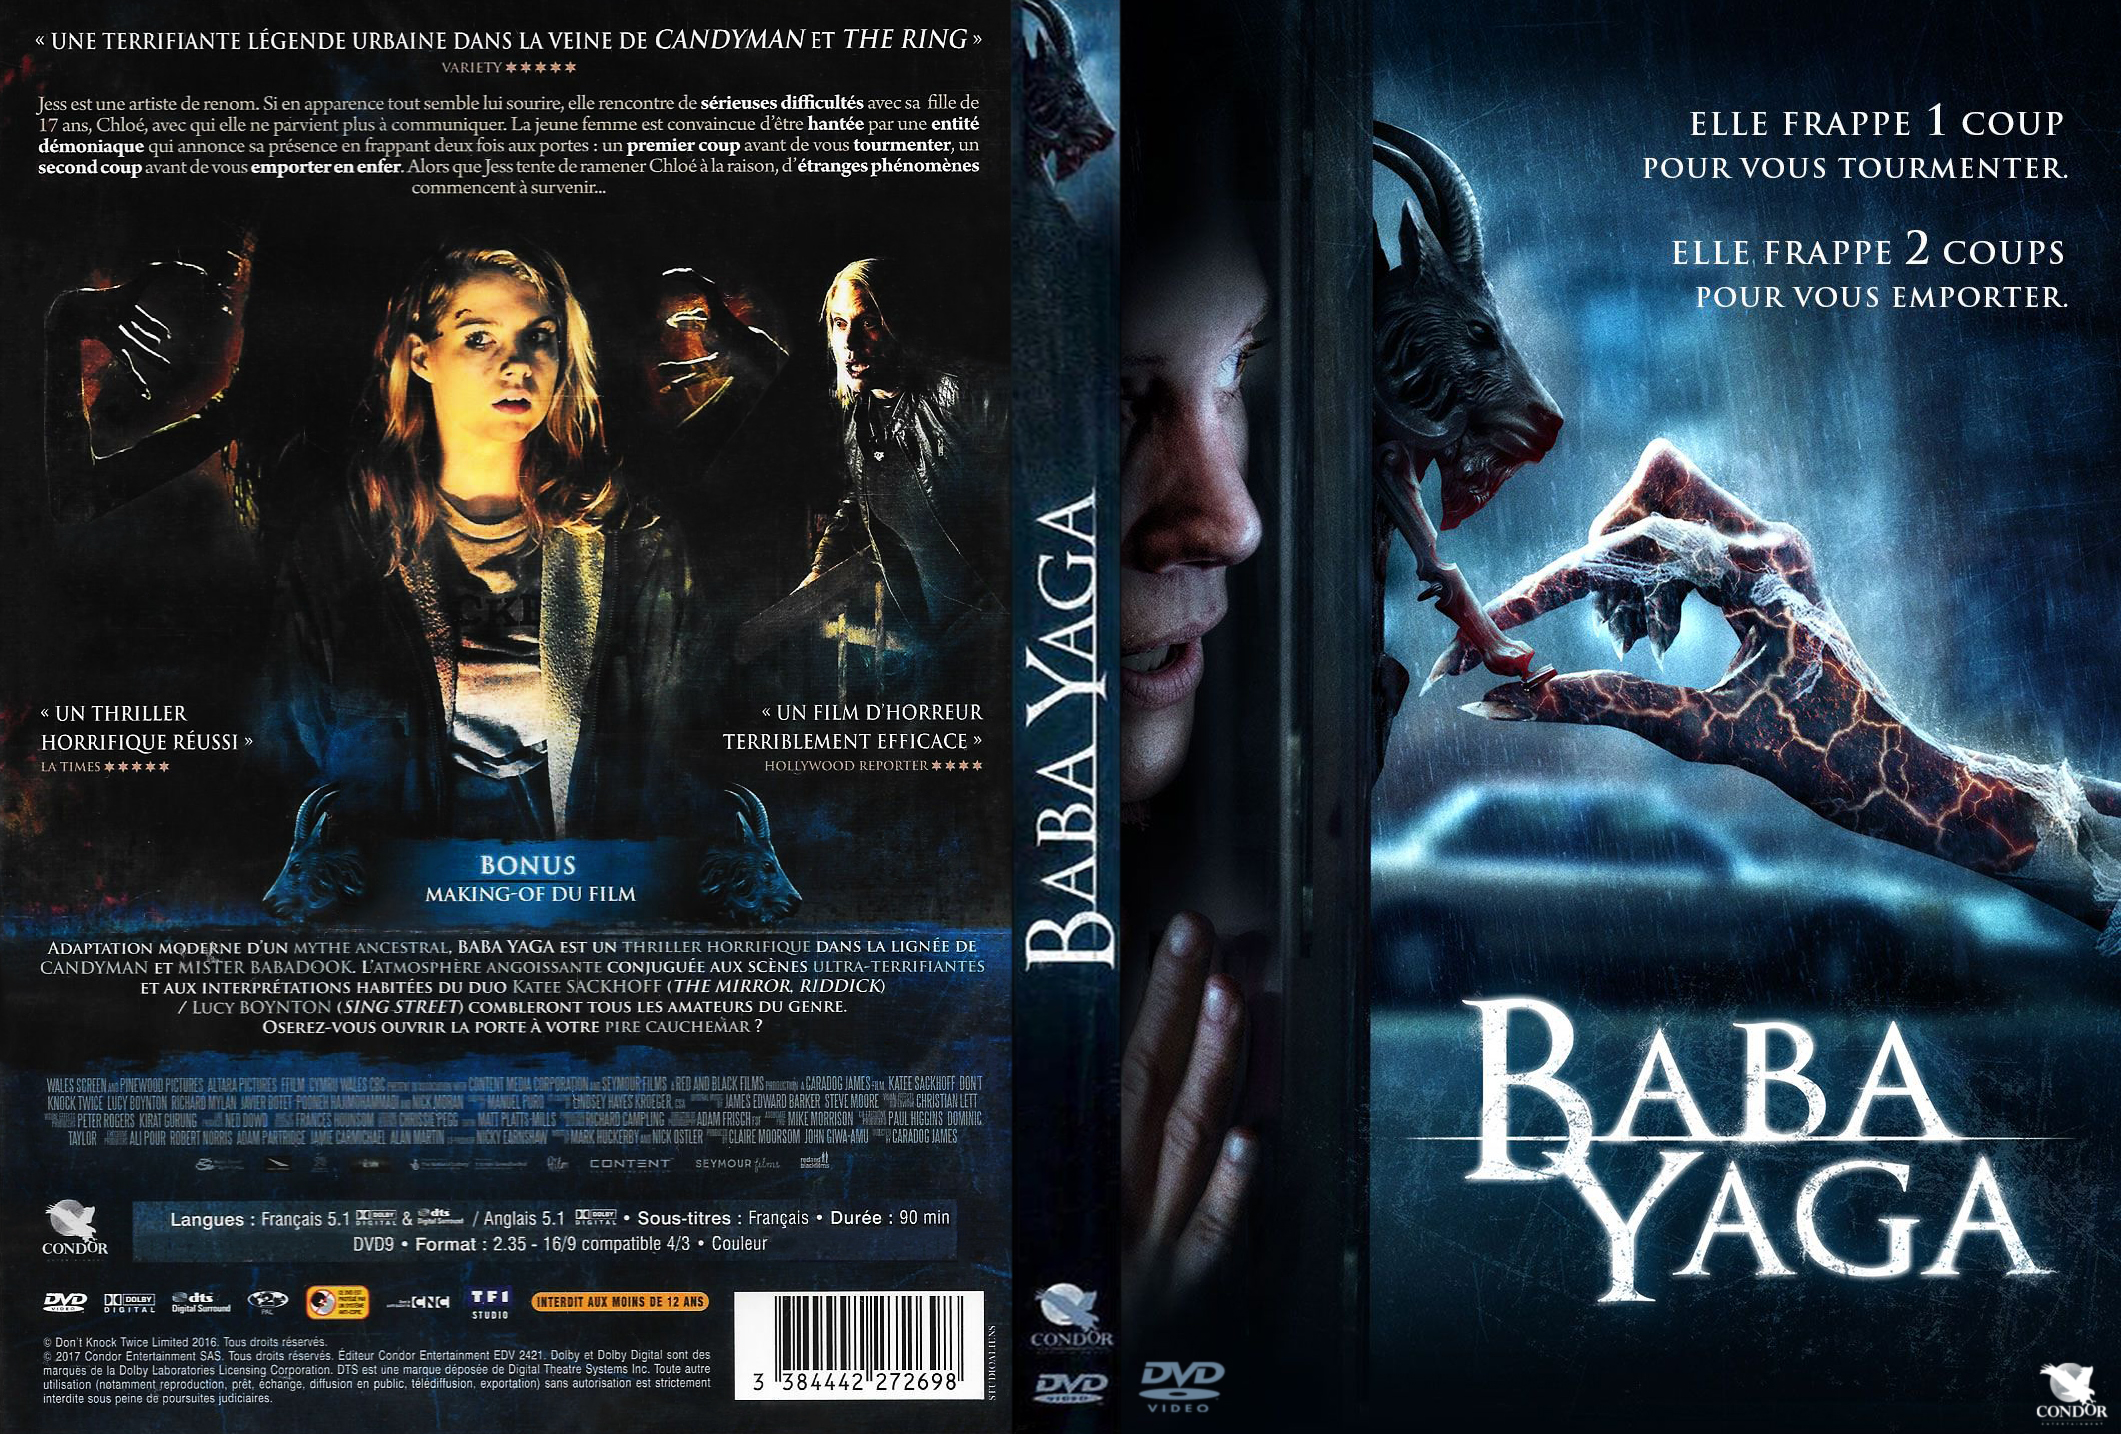 Jaquette DVD Baba Yaga